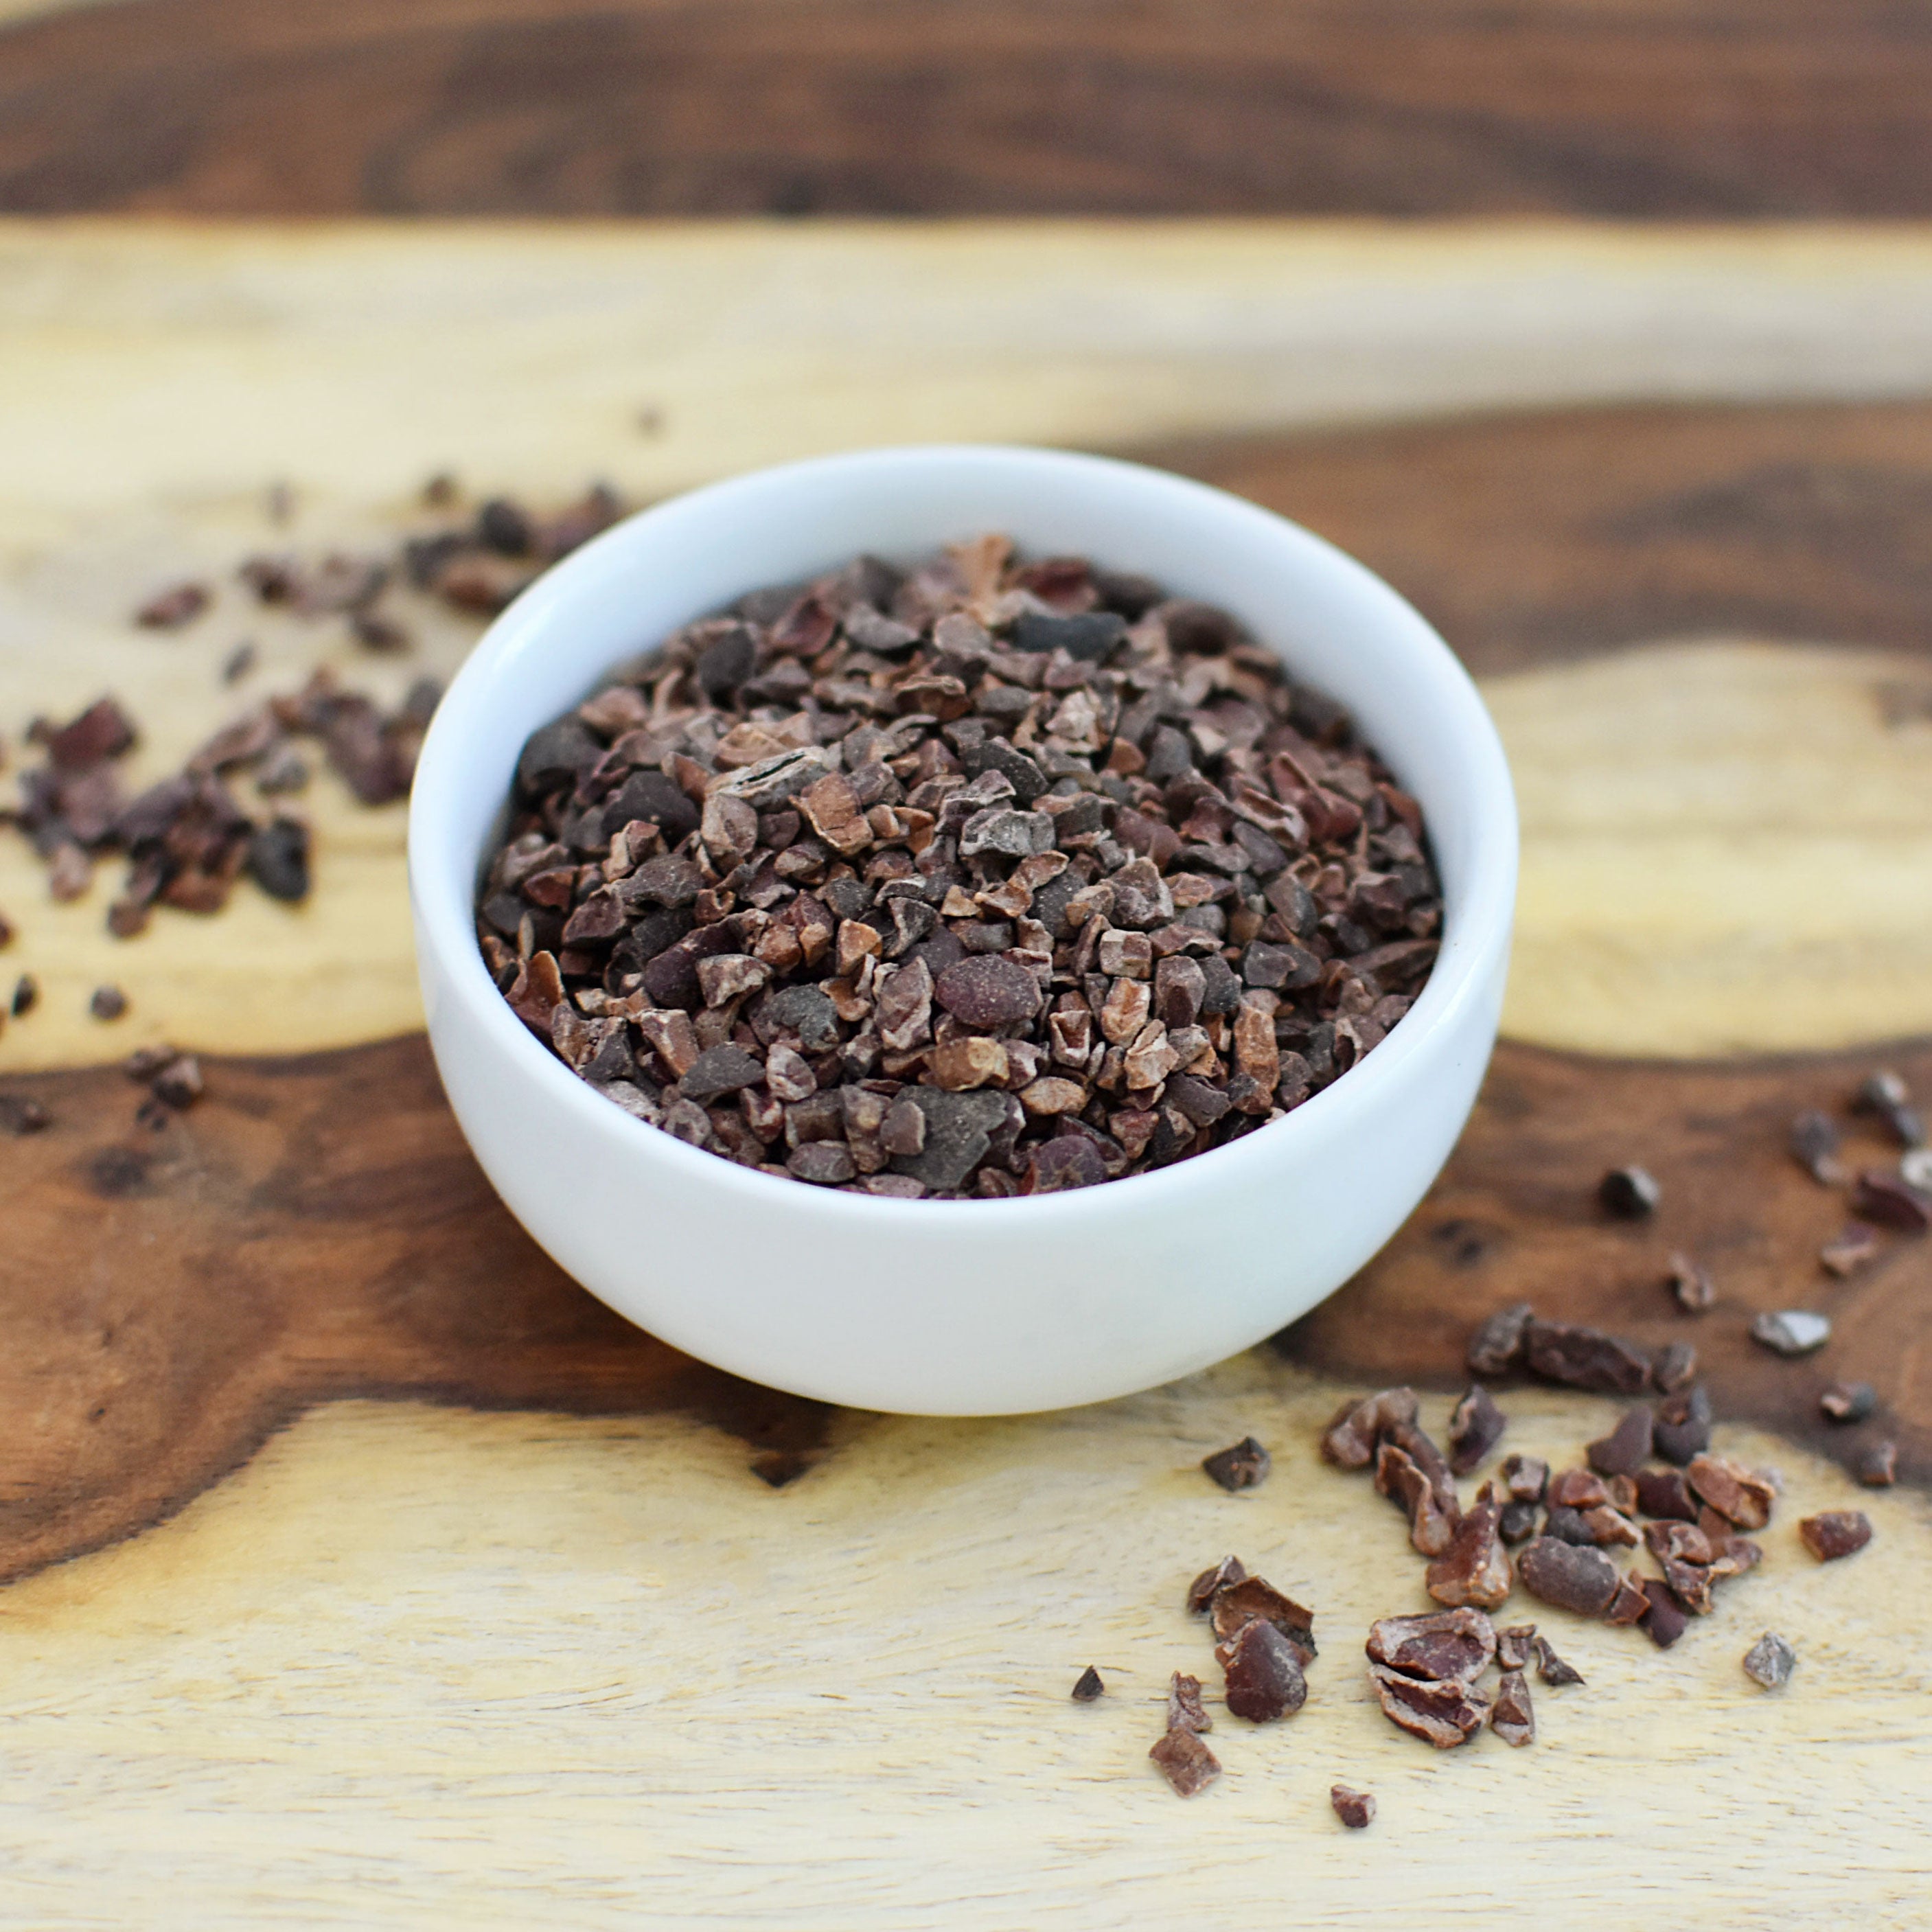 Organic Black Cocoa Powder: Unsweetened & Dutch Processed – Anthonys Goods